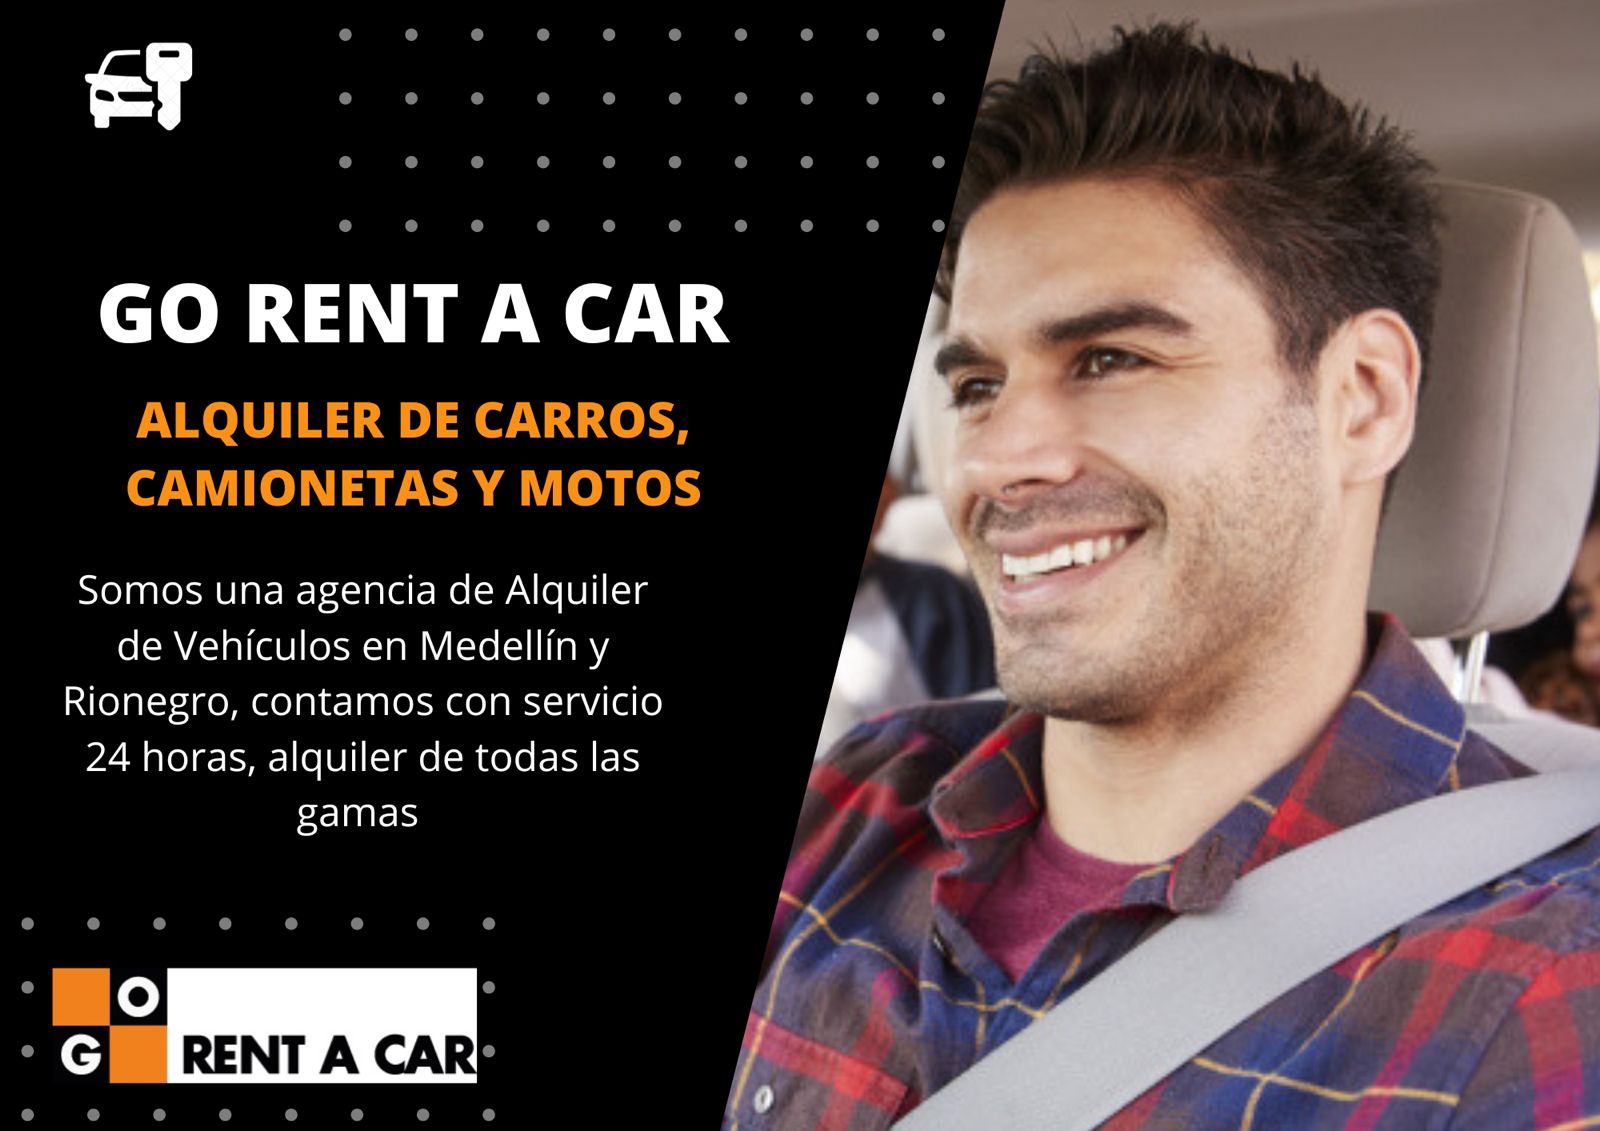 Rent a car en Medellin